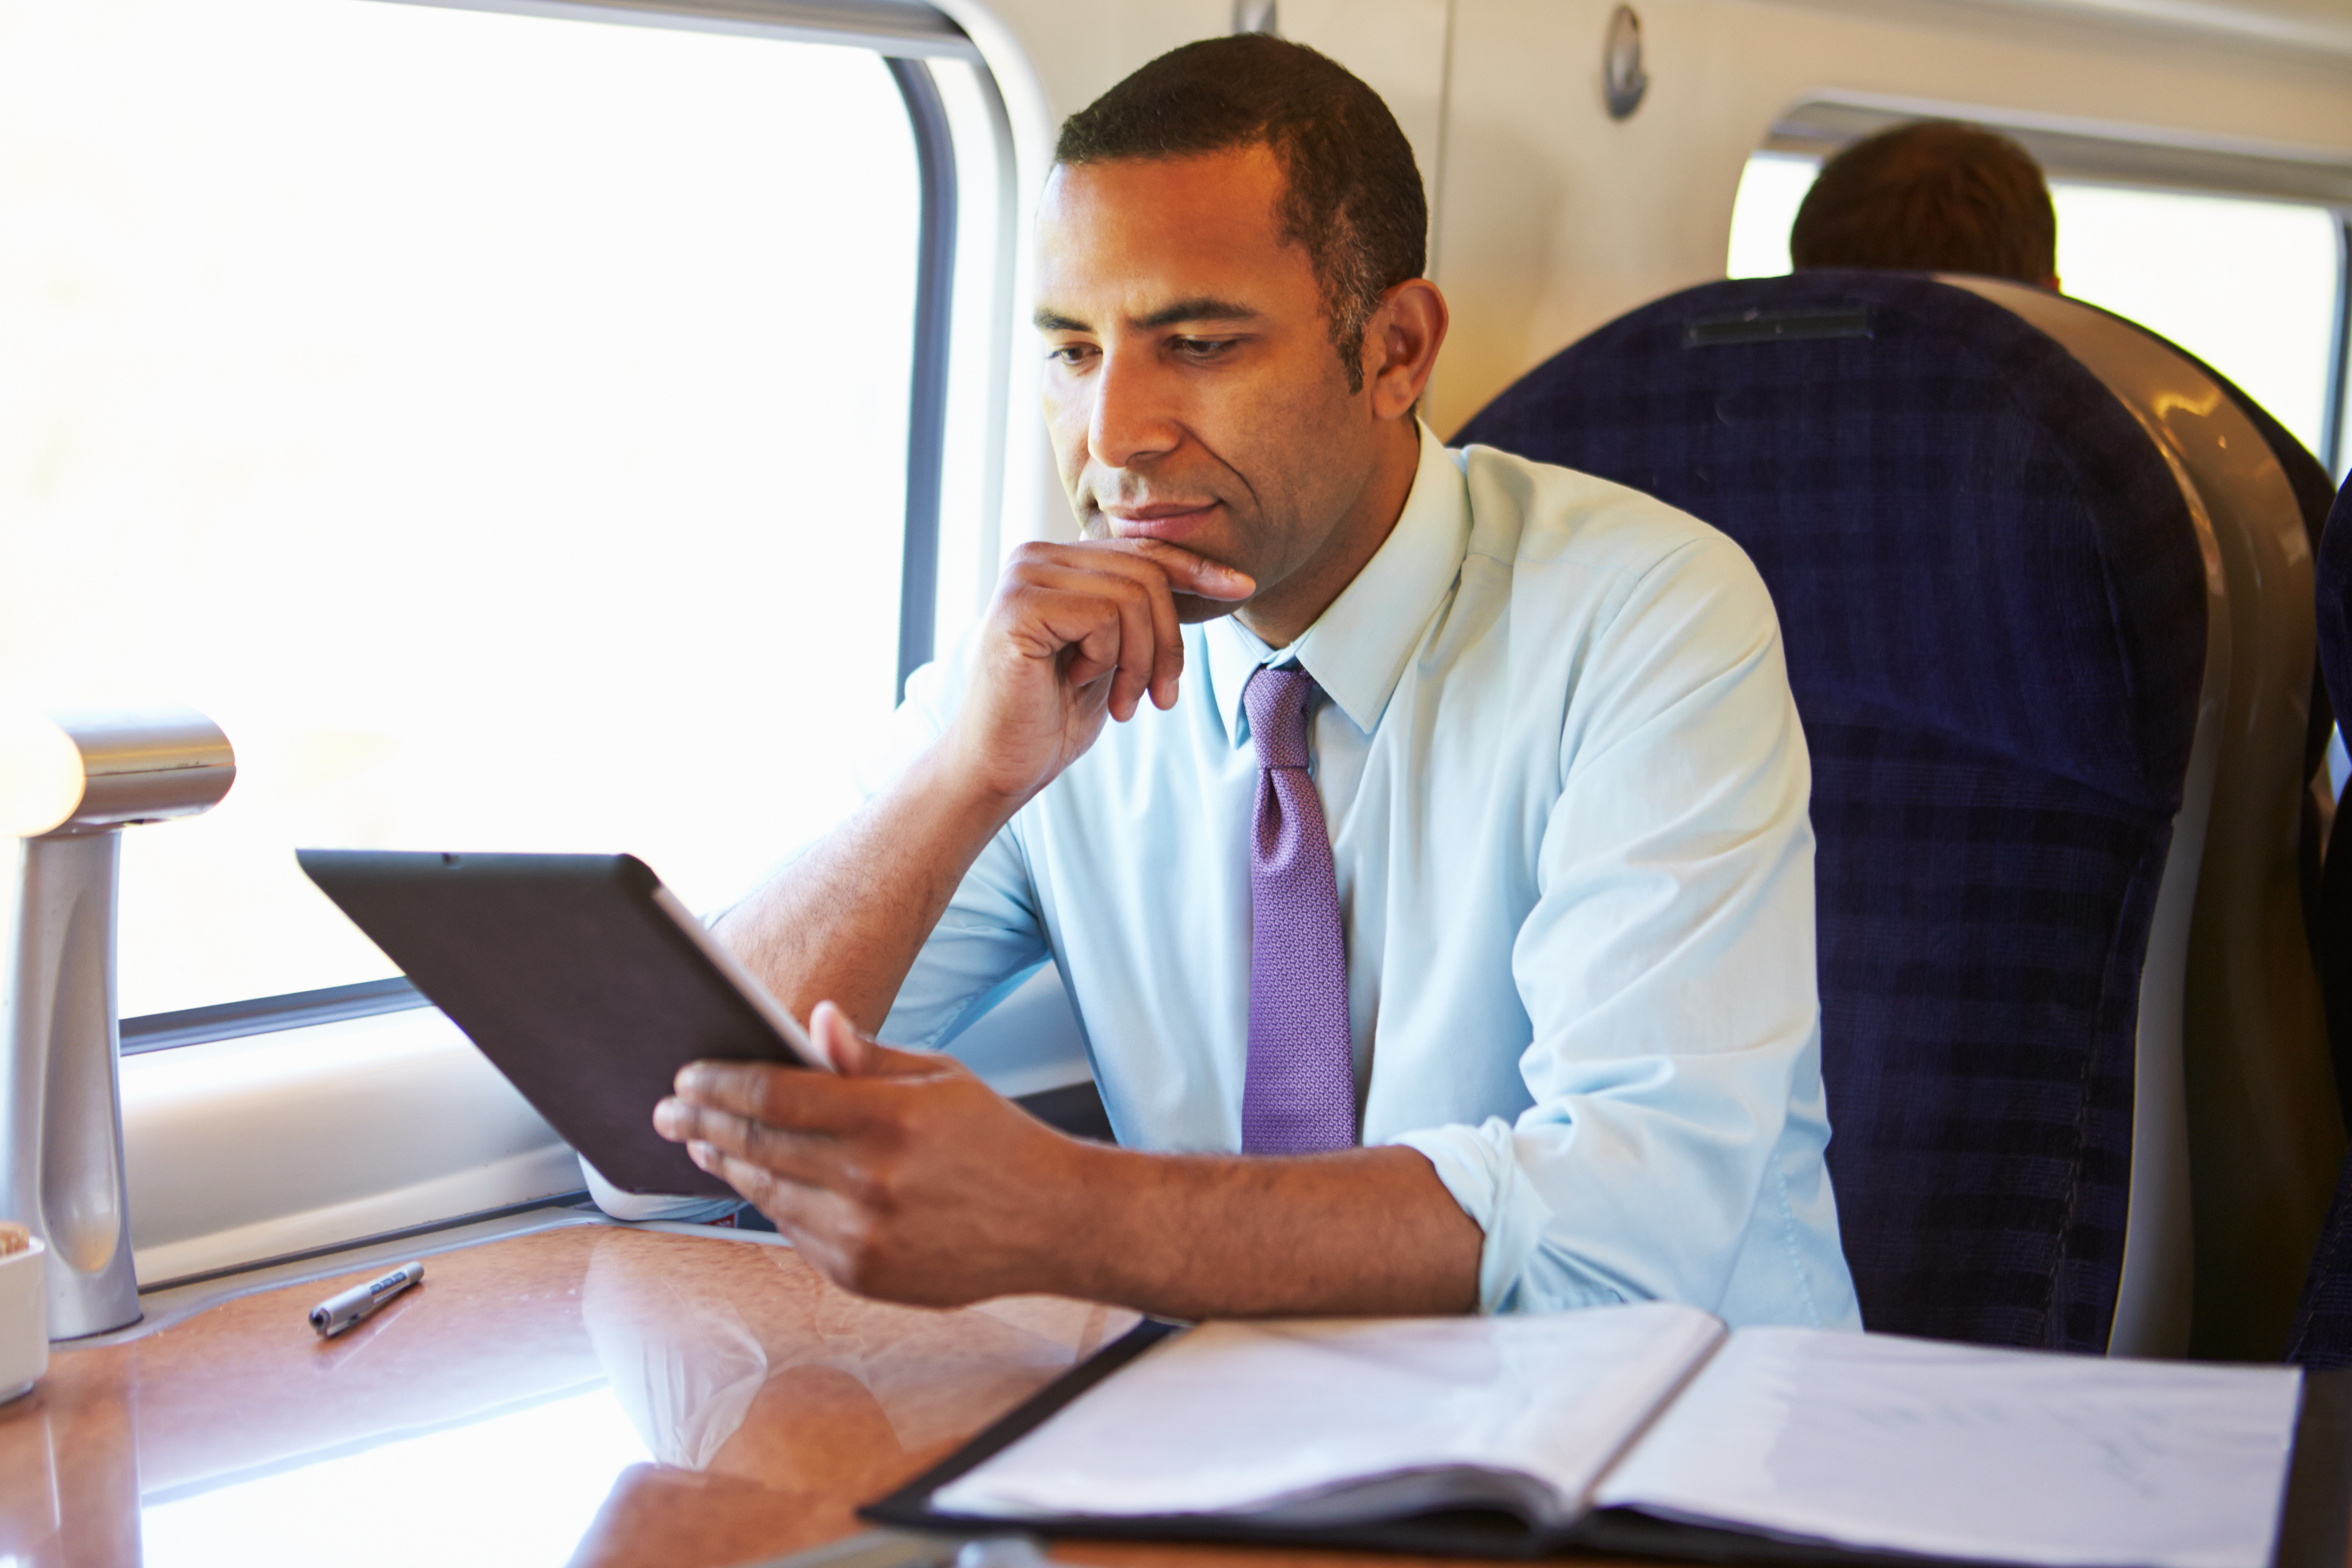 A man sitting in a window seat on a train | Source: Shutterstock